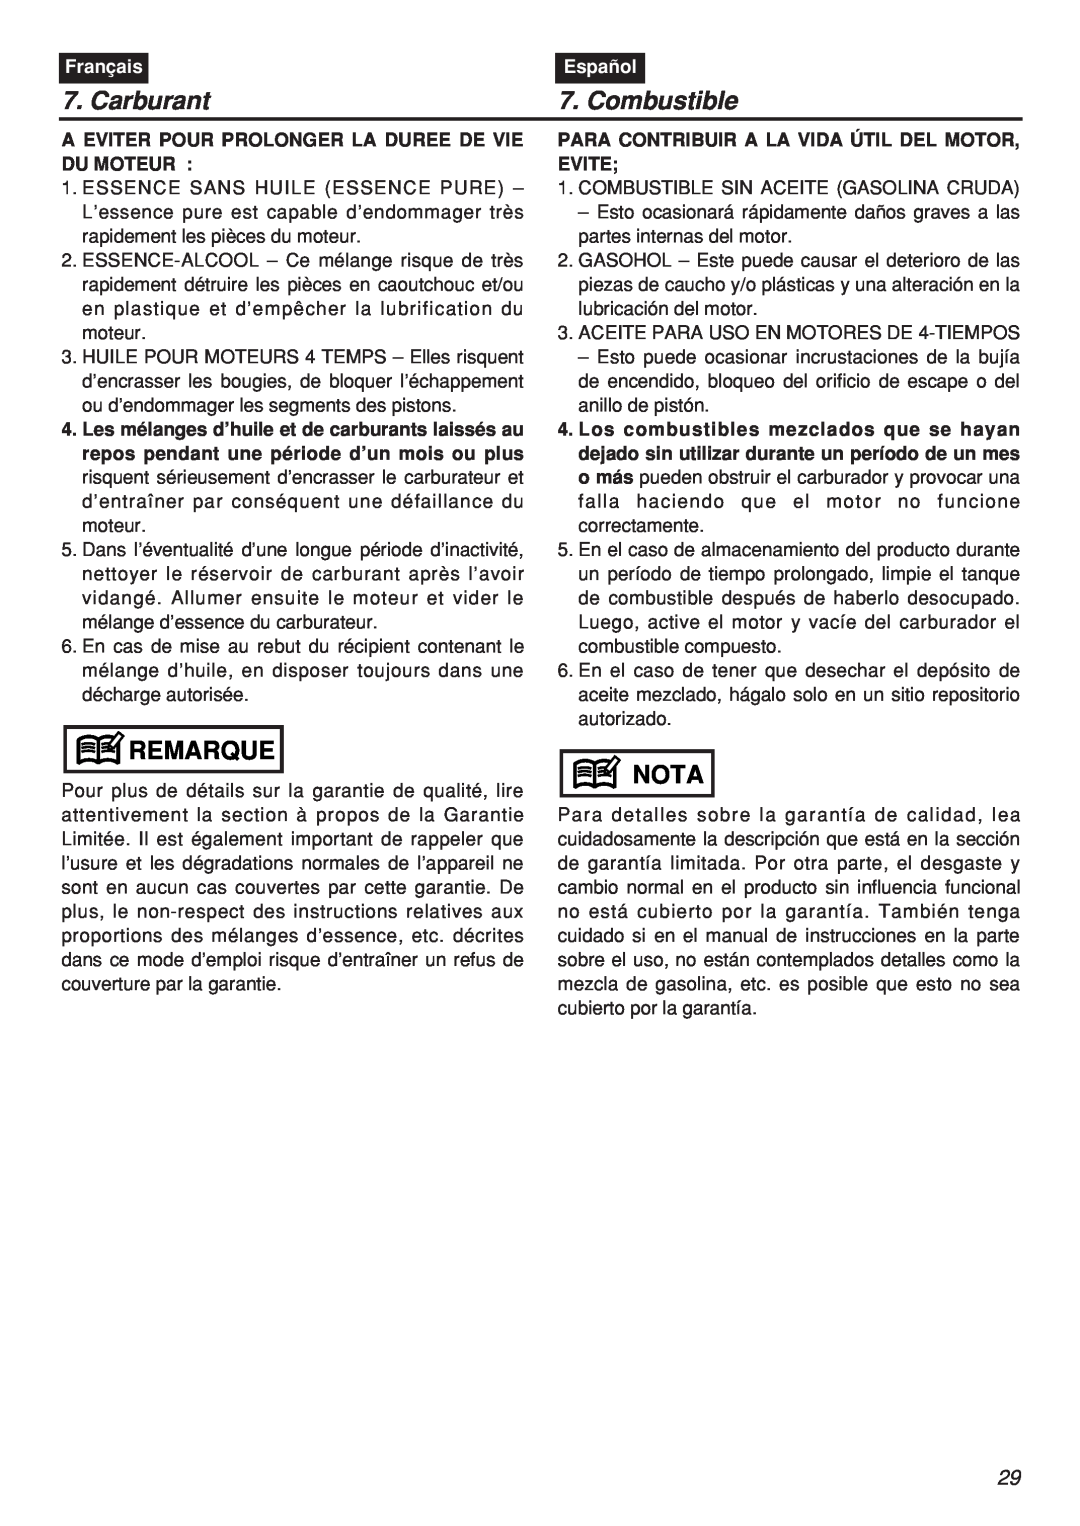 Zenoah EBZ100-CA, EBZ100RH manual Carburant, Combustible, Remarque, Nota, Français, Español 